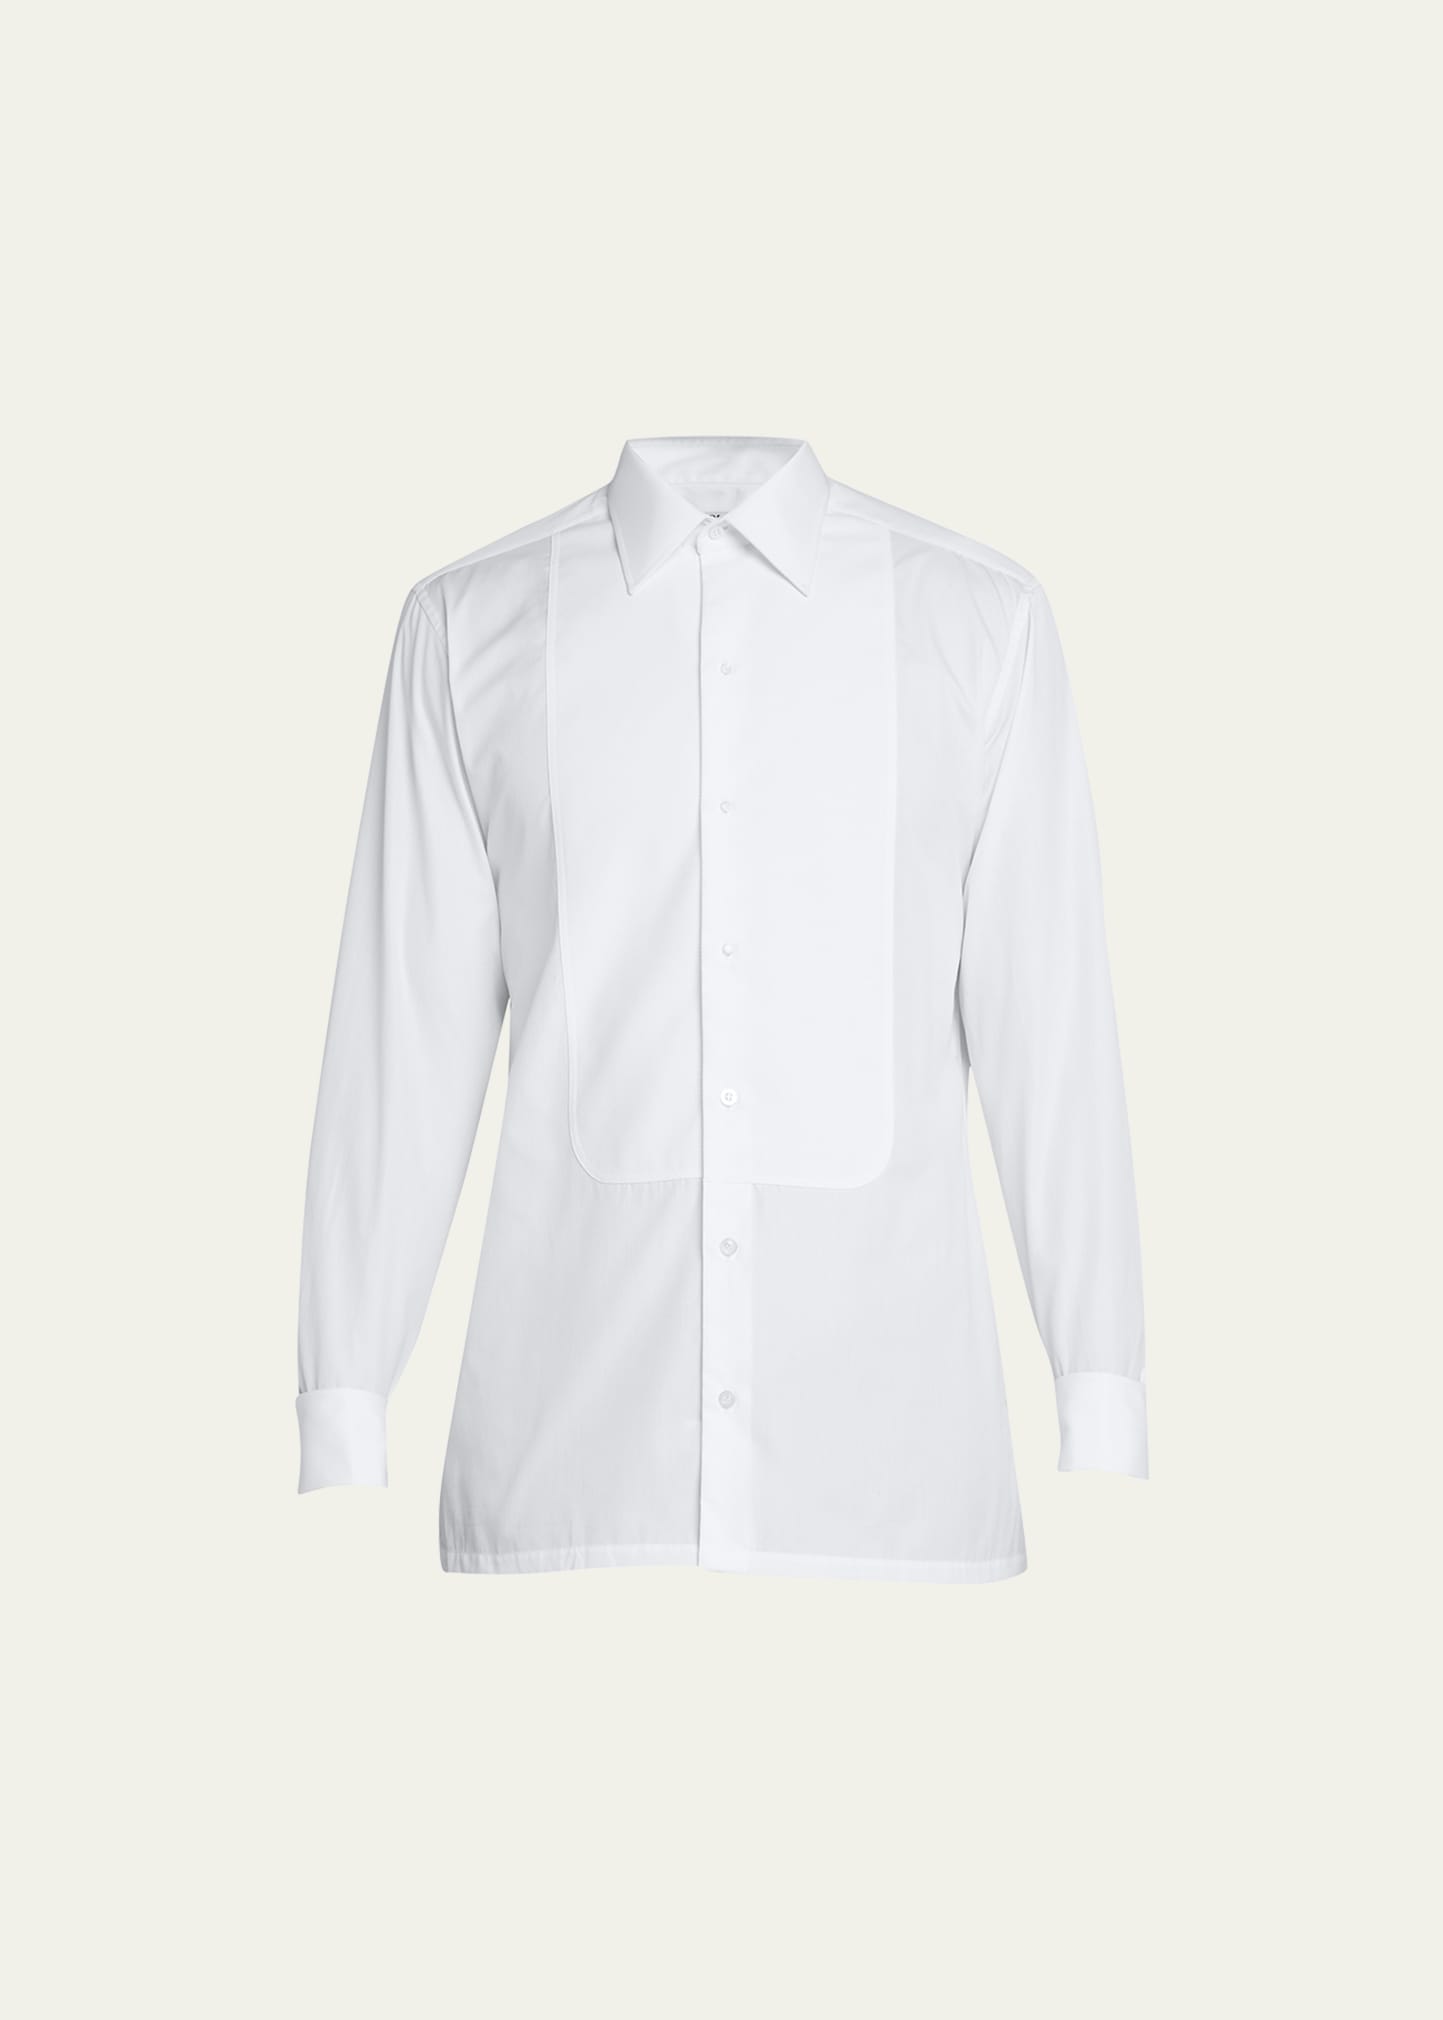 Charvet Men's Pique-bib French Cuff Dress Shirt In White